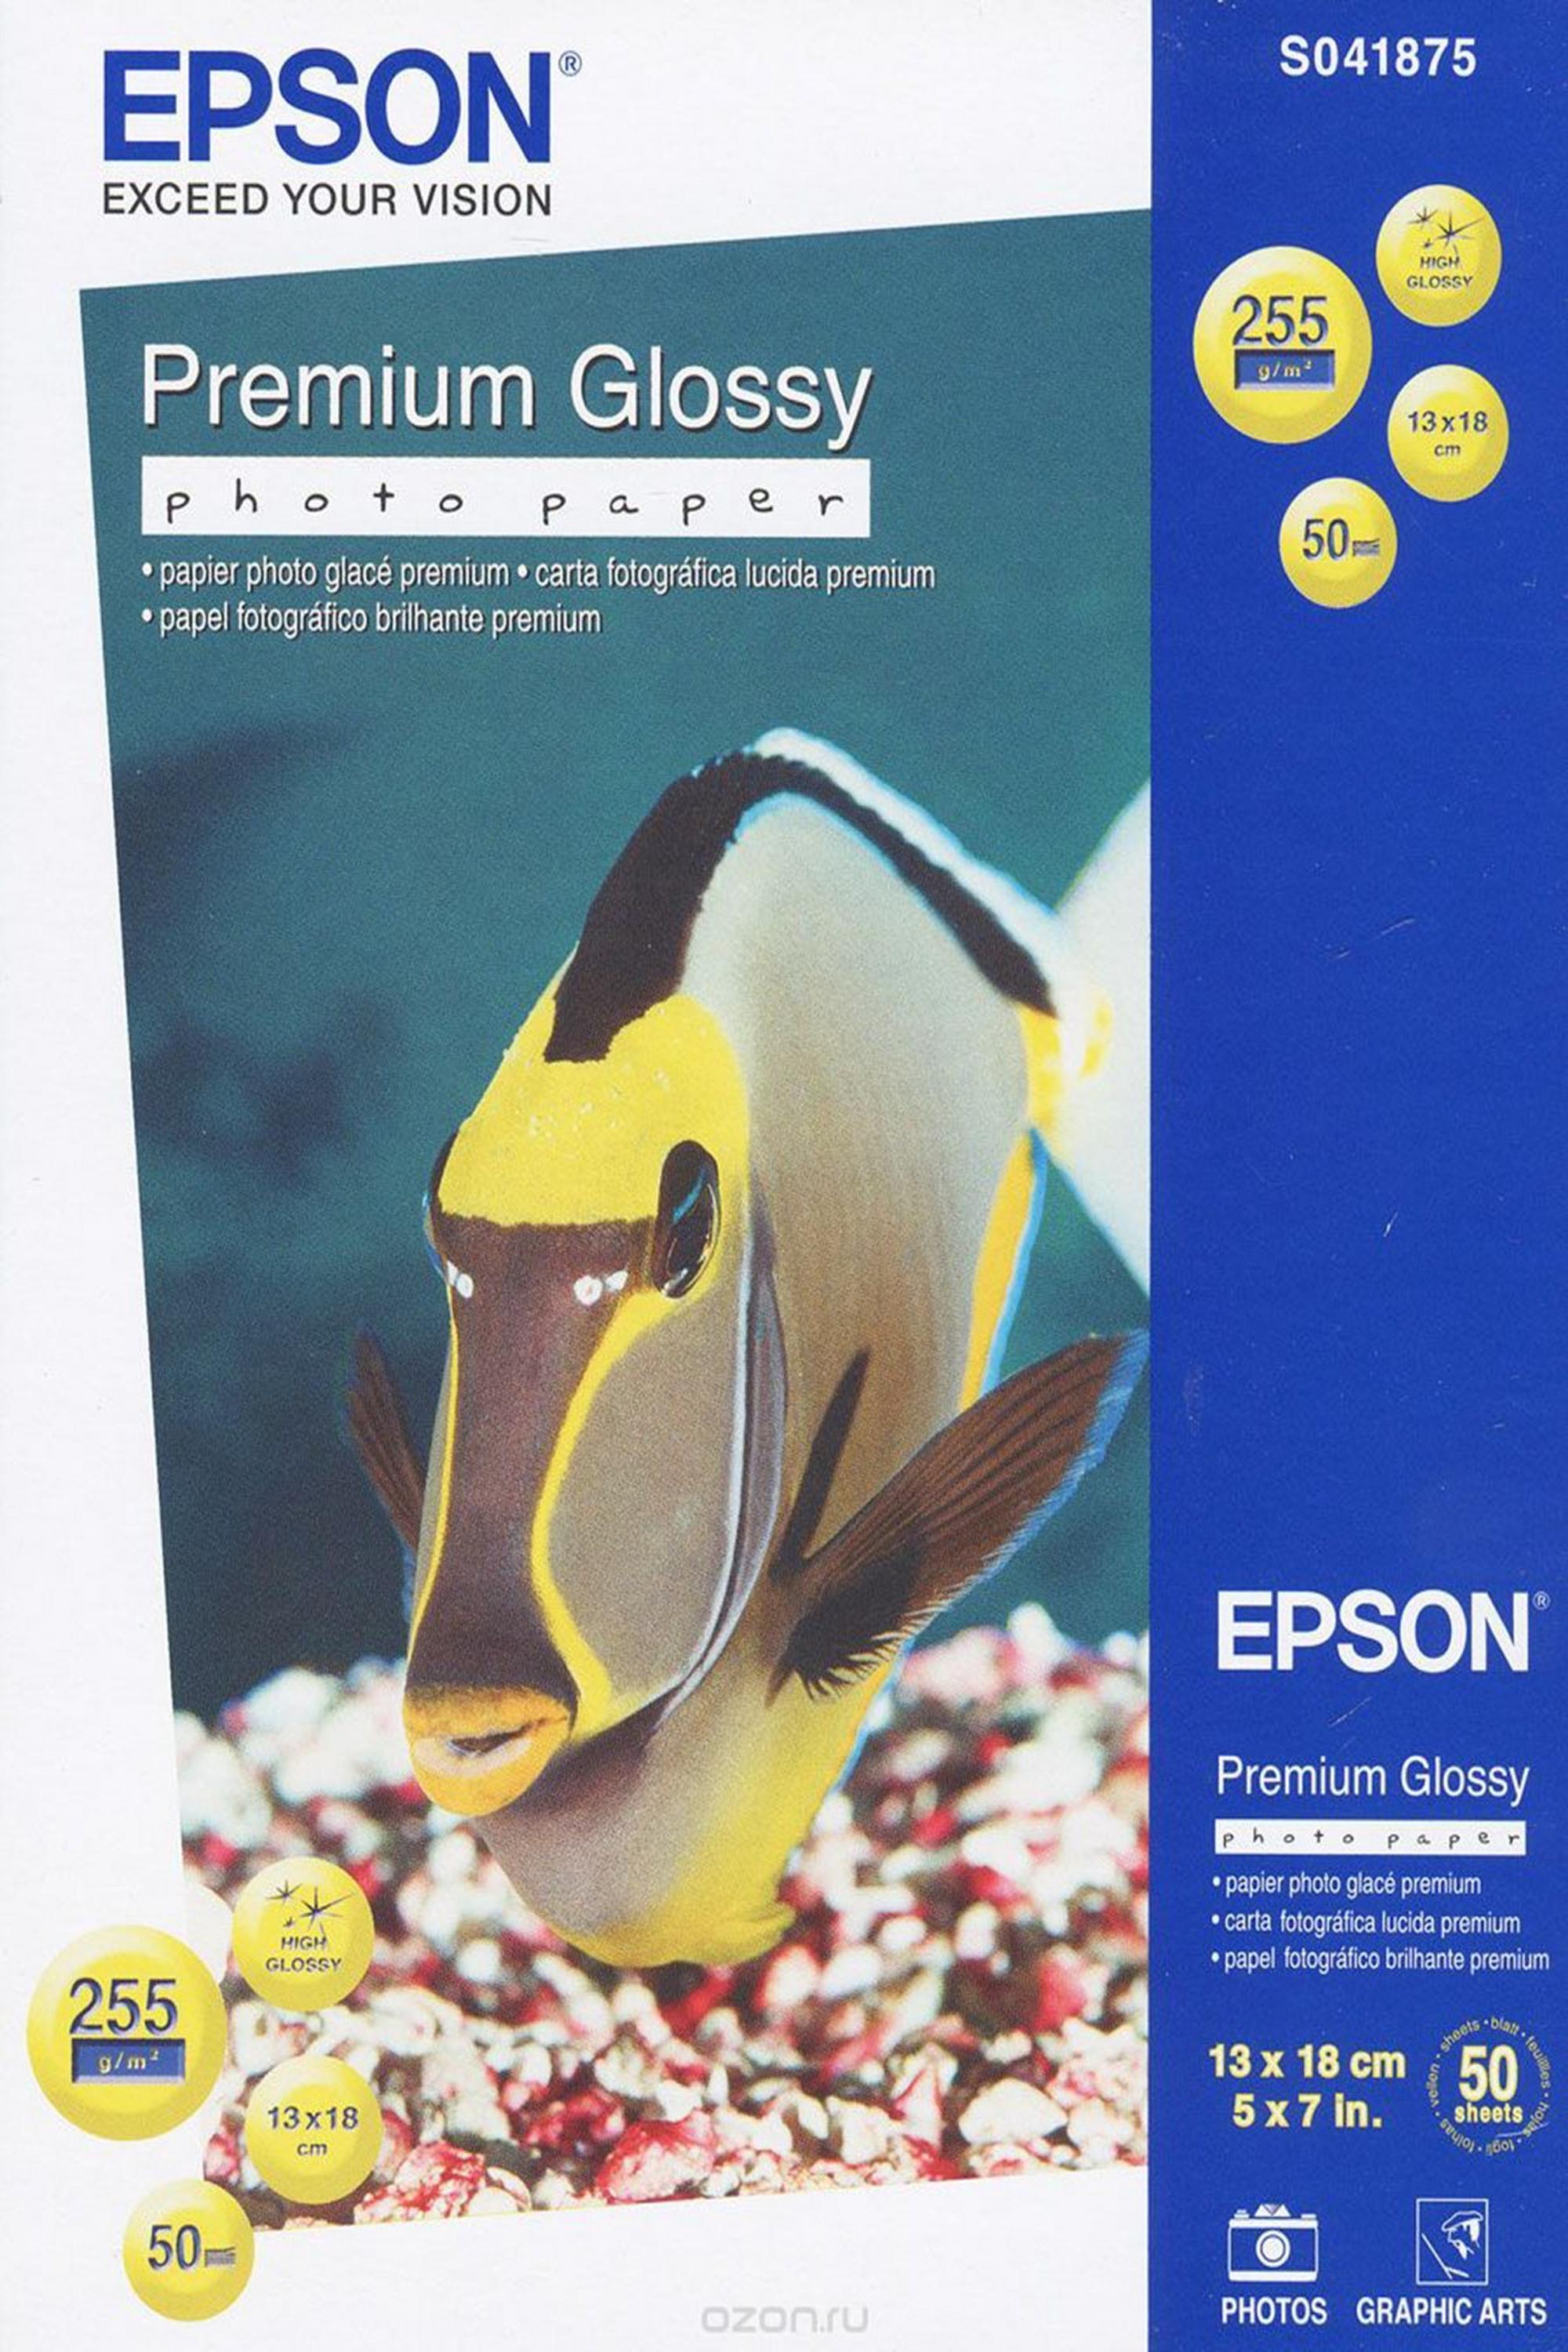 Epson Premium Glossy Photo Paper - 13x18cm, 255g/m² - 50 sheets